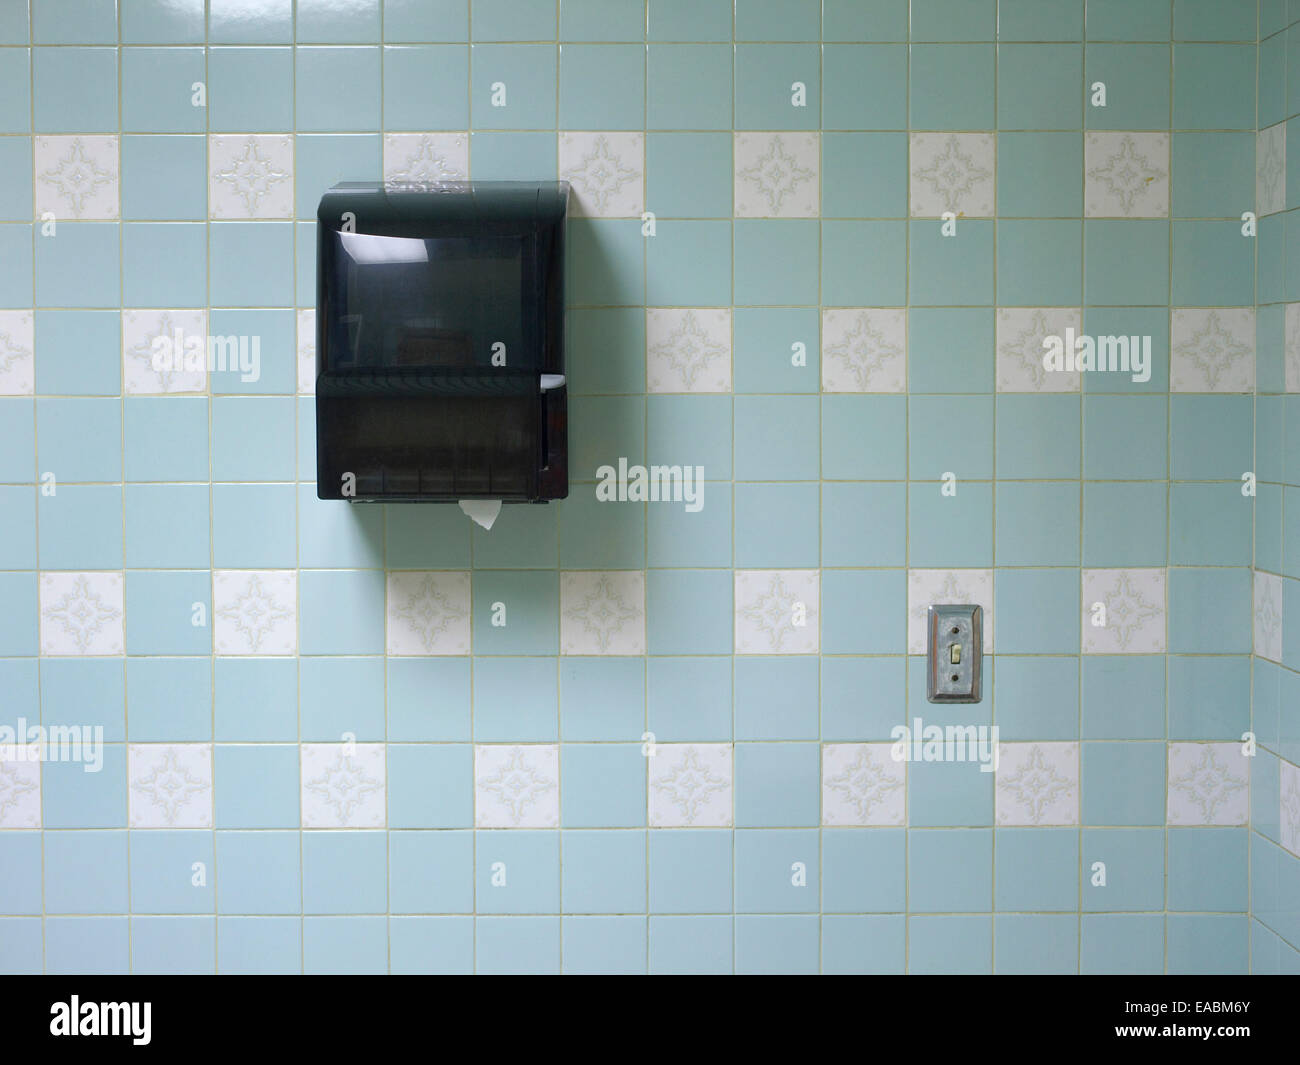 Paper towel dispenser and blue ceramic tiles of public men's room Stock Photo